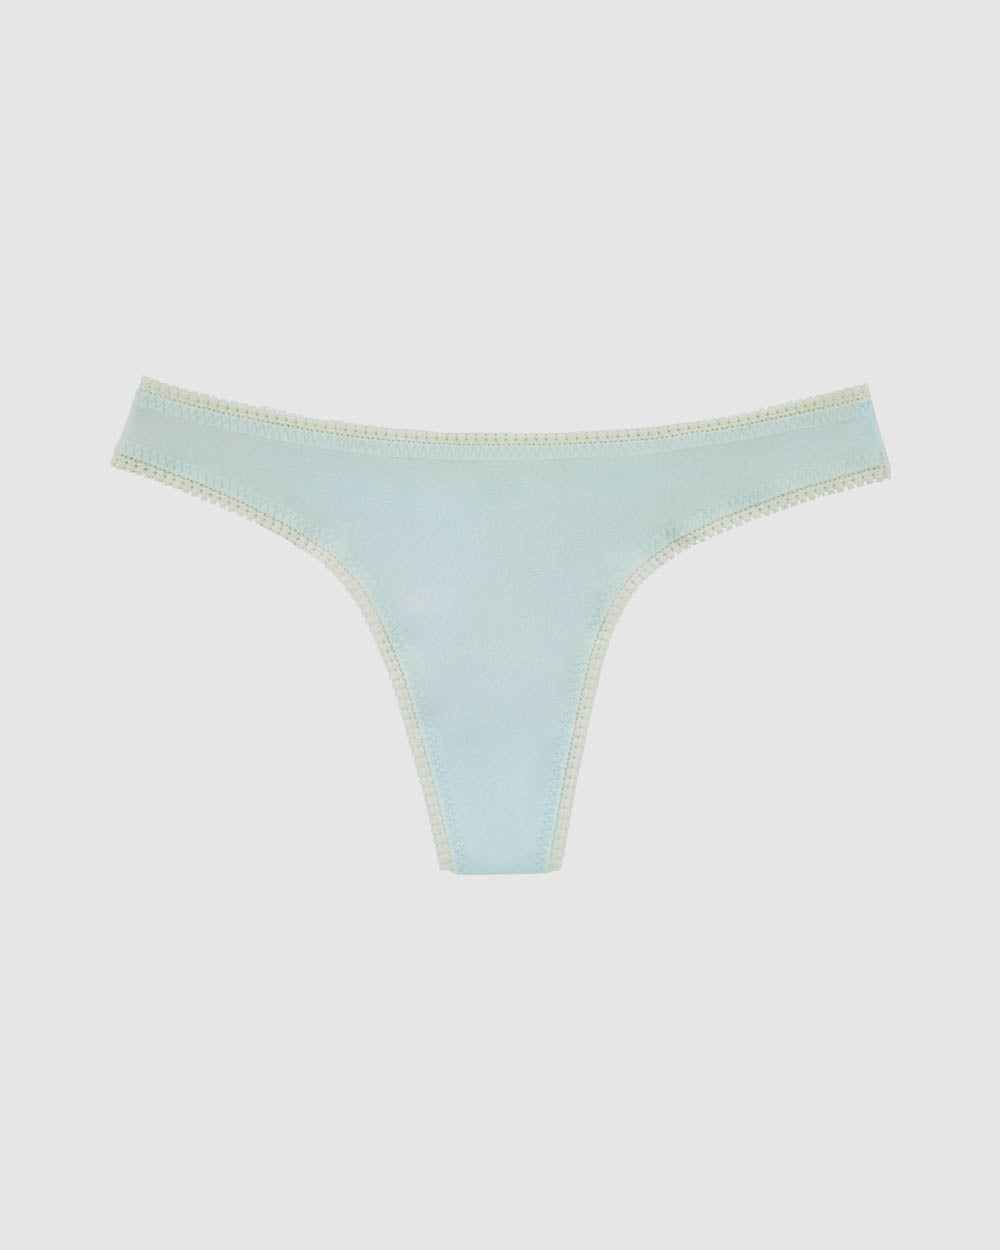 A lady wearing clearwater gossamer mesh hip g thong underwear.